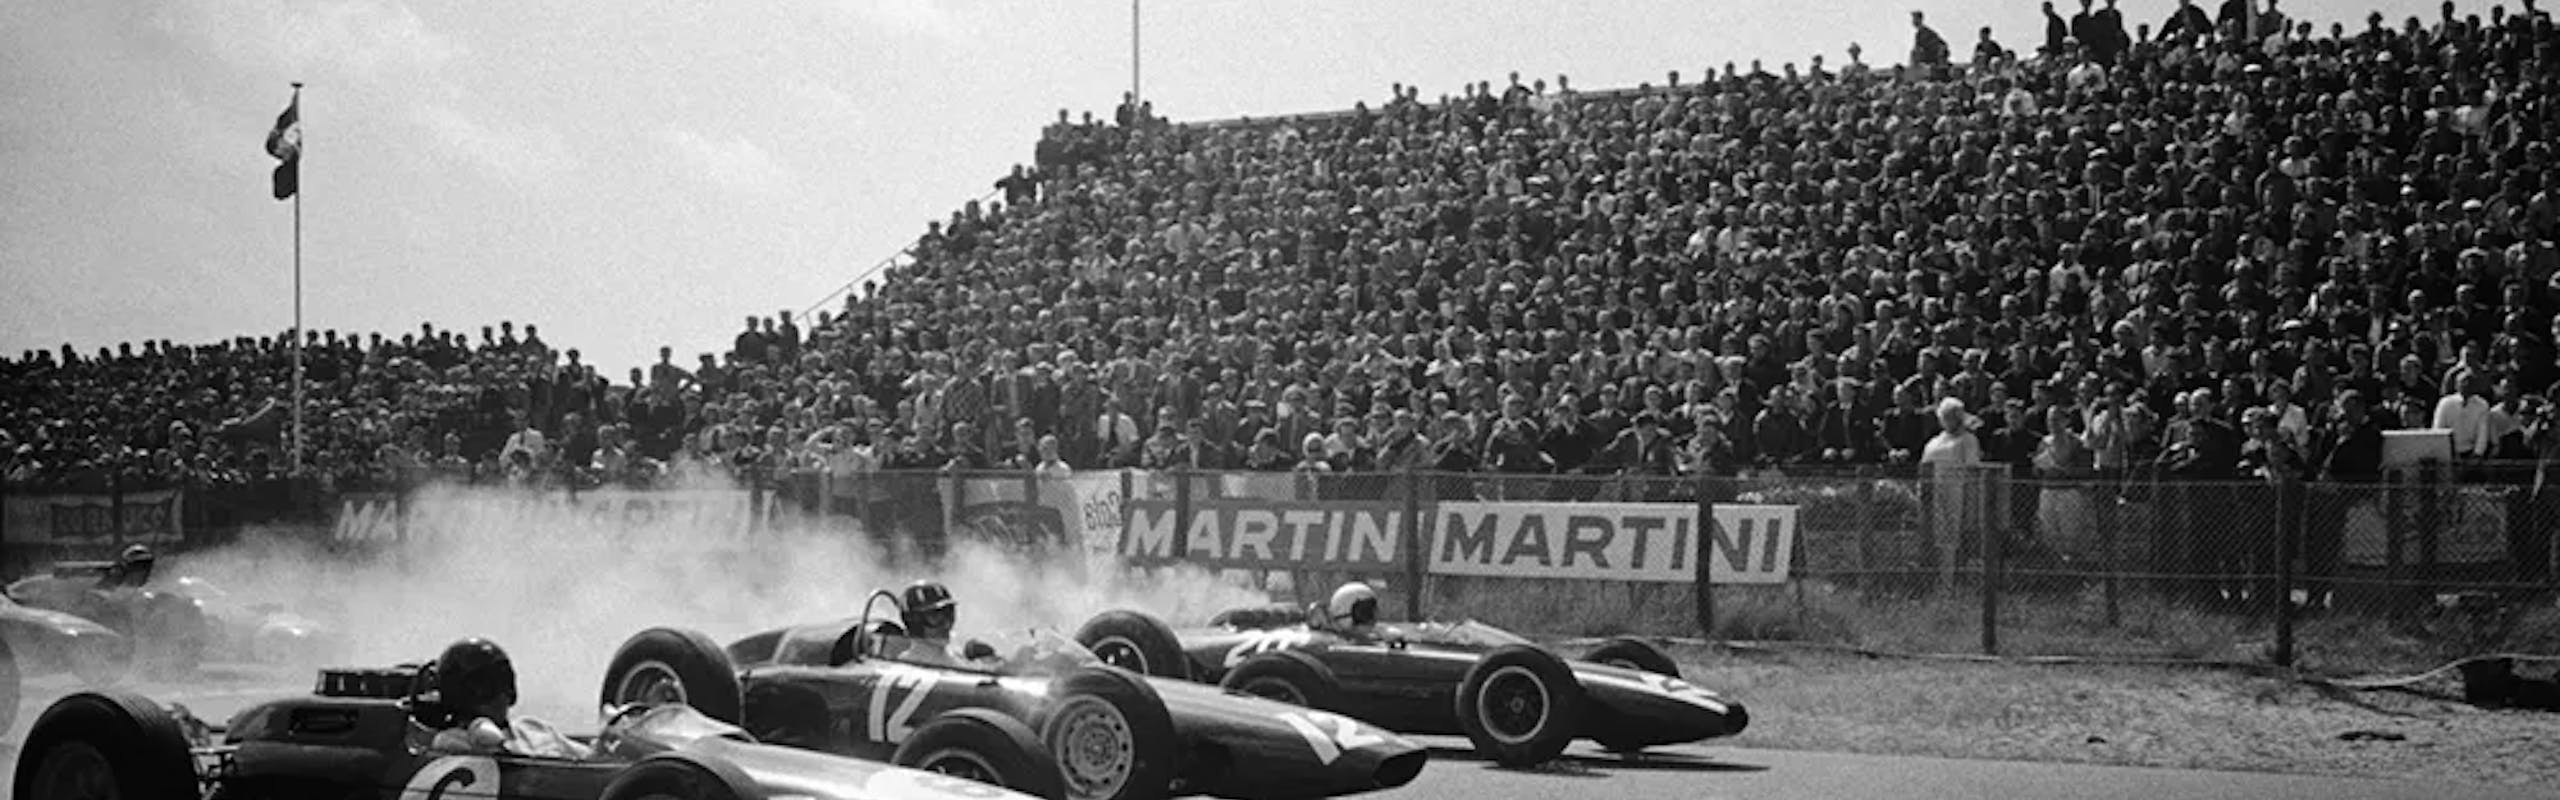 formula 1 vintage race